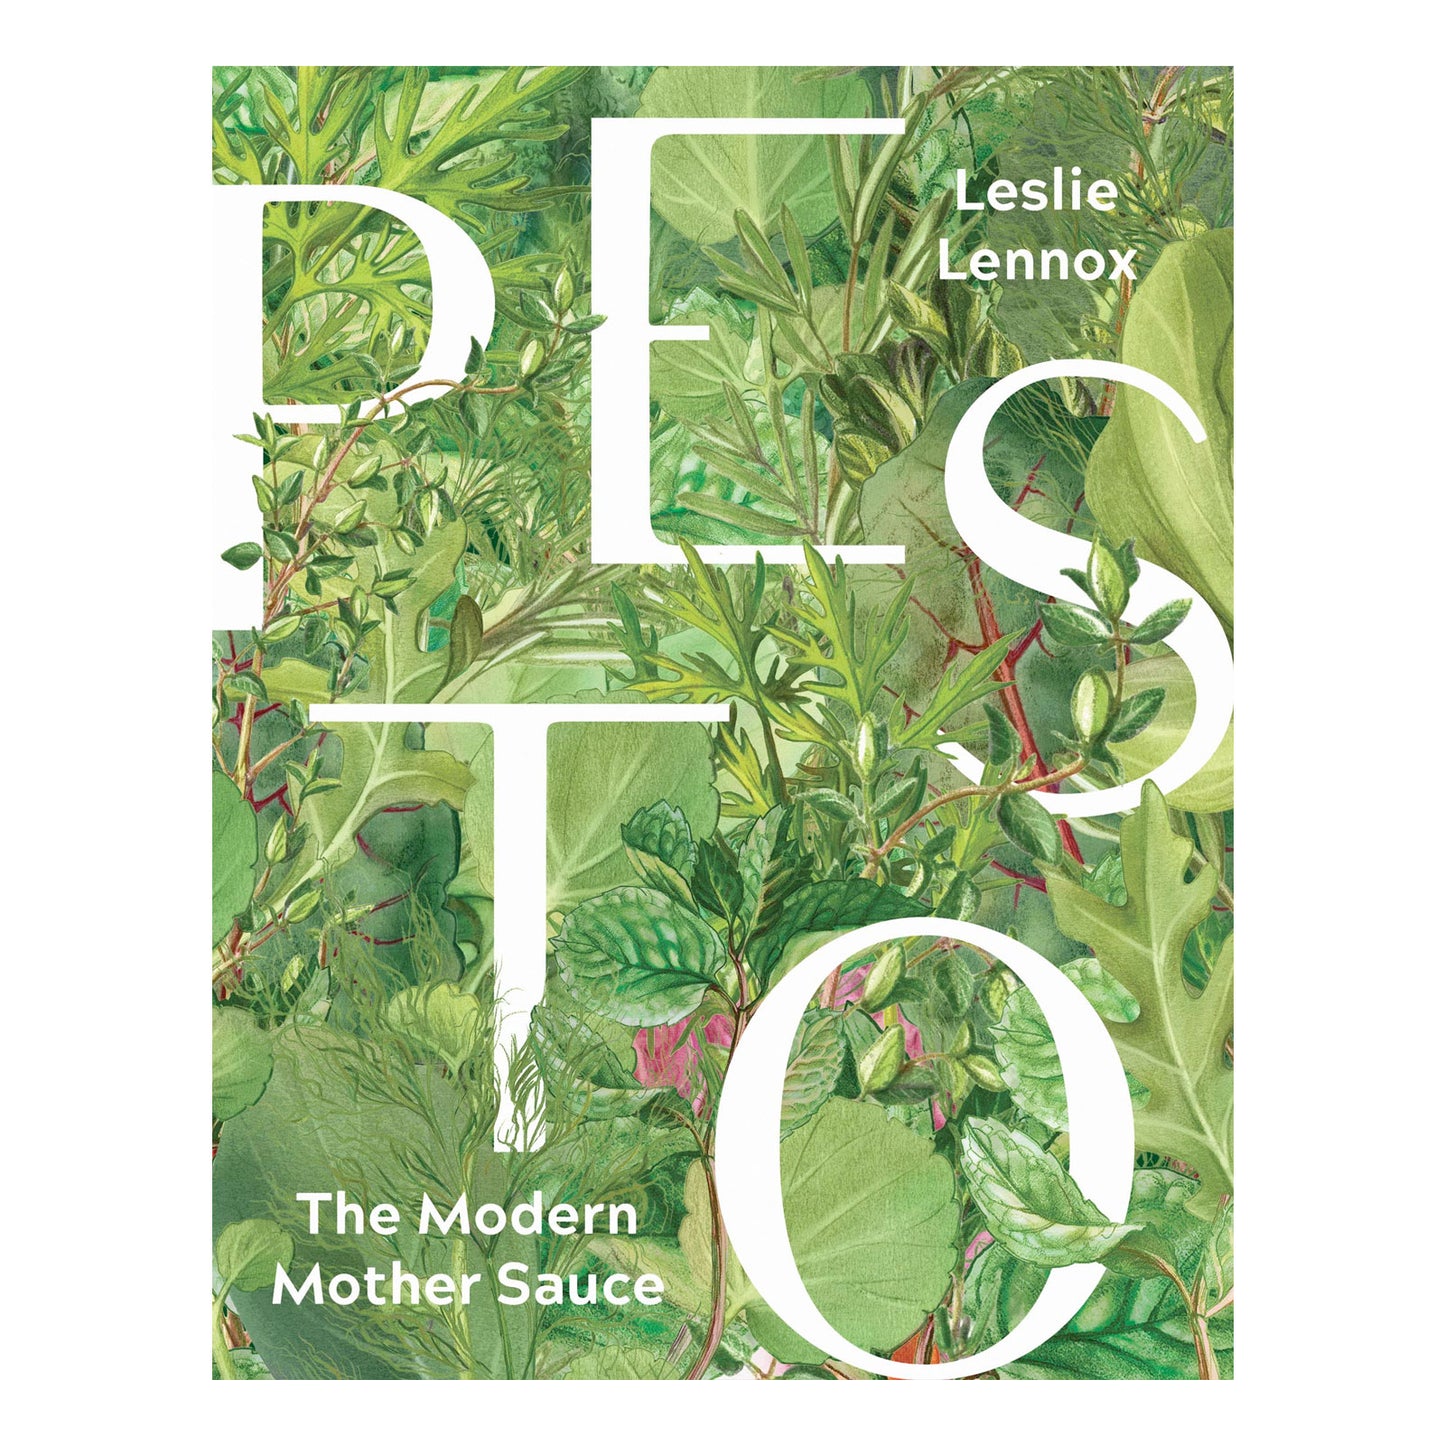 Pesto: The Modern Mother Sauce by Leslie Lennox